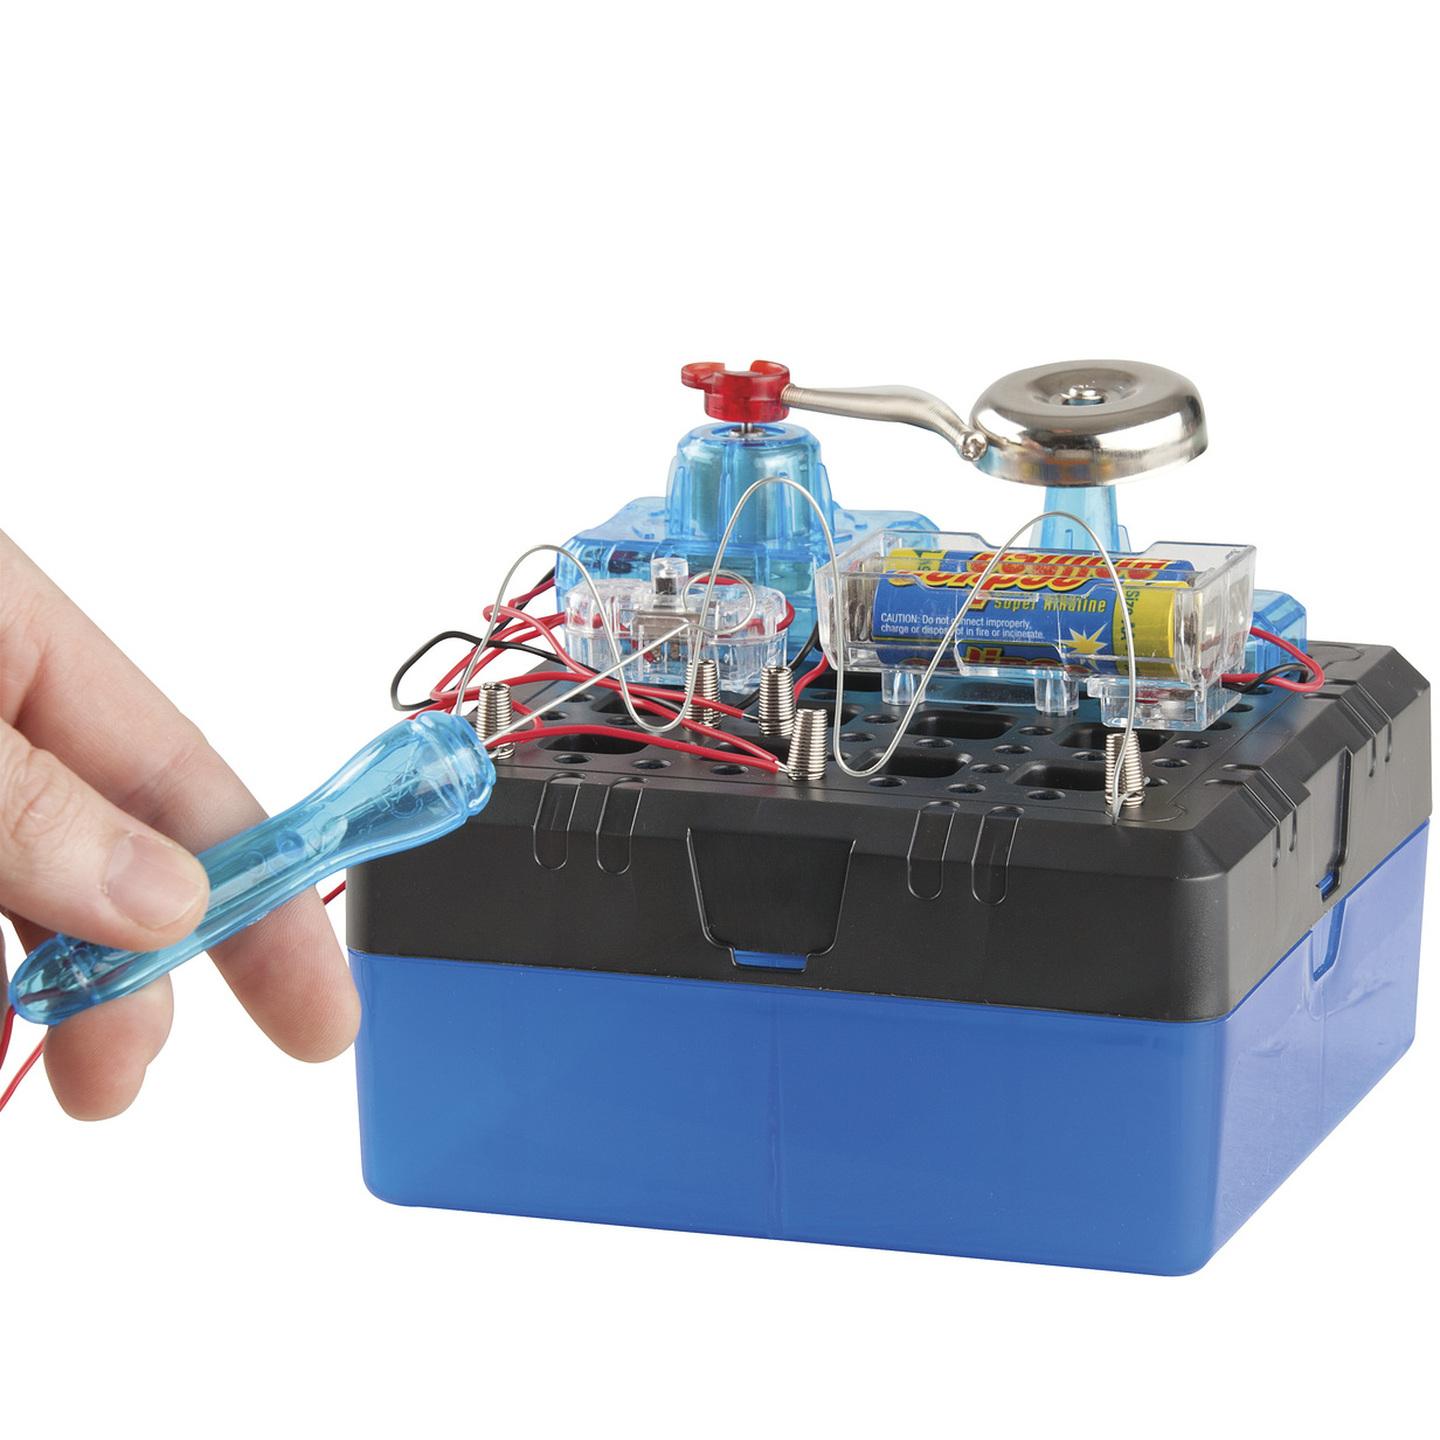 Electronic Circuit Maze Challenge Educational Science Kit